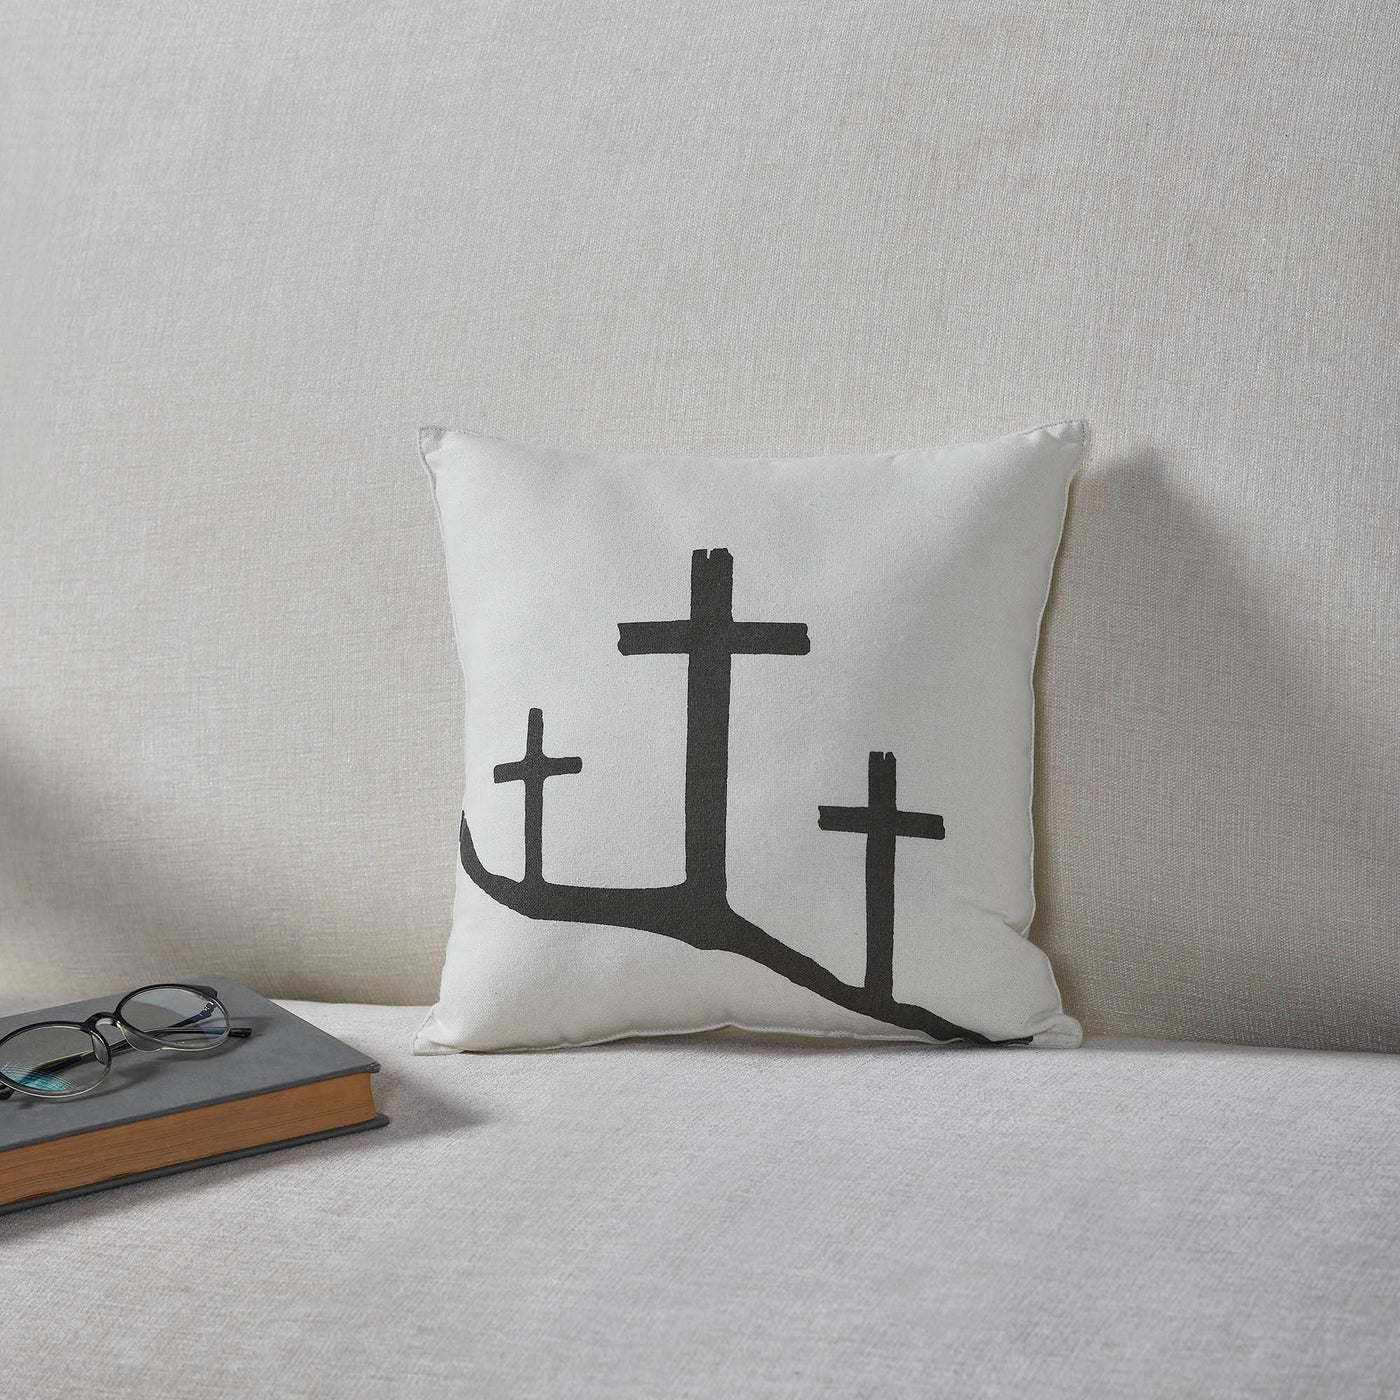 Risen Three Crosses 12" Accent Pillow